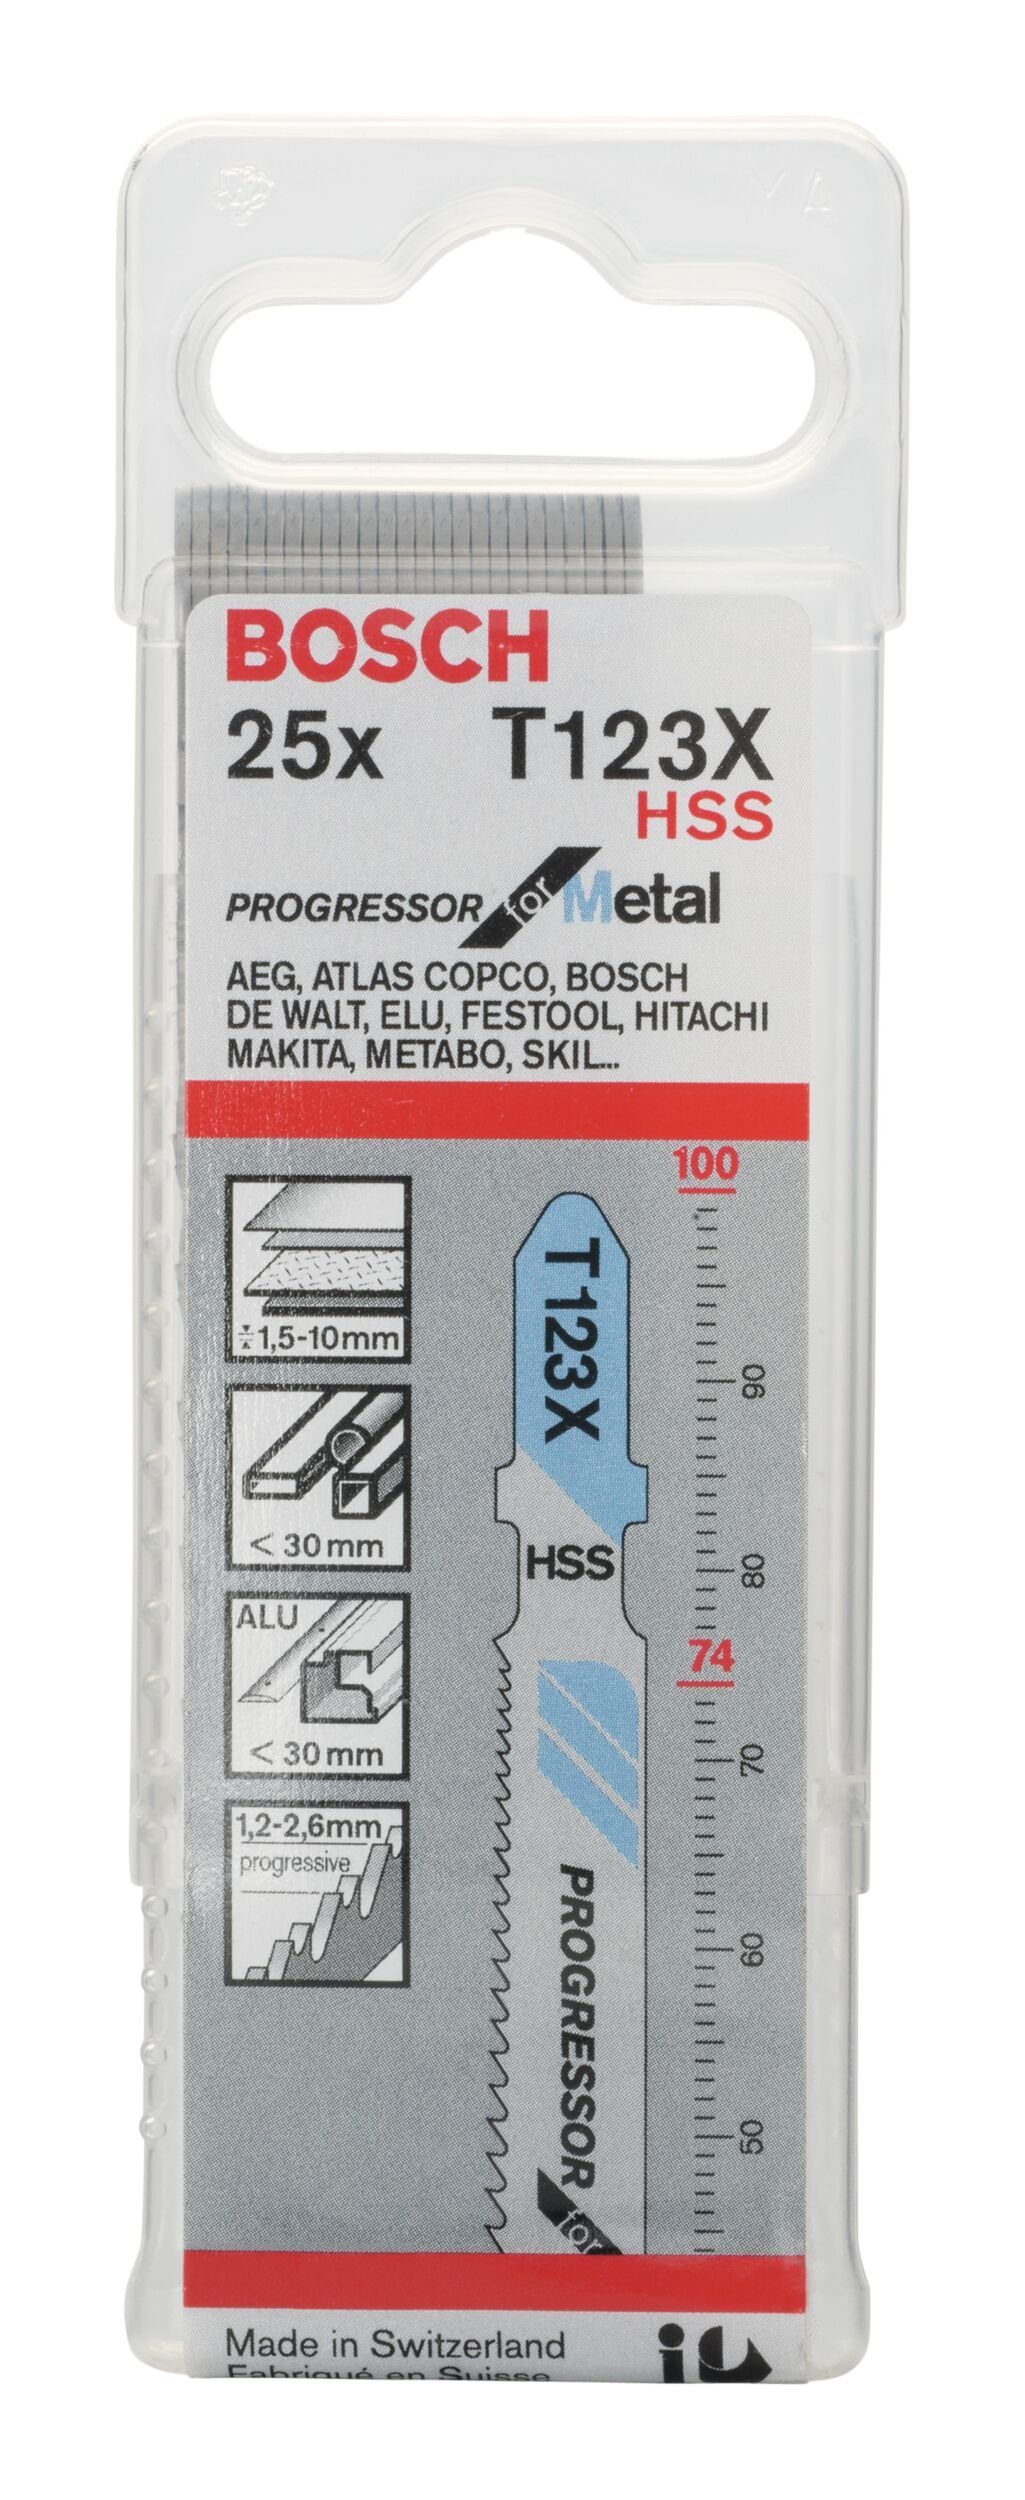 XF (25 Stichsägeblatt 123 Stück), Metal 25er-Pack BOSCH Progressor for T -